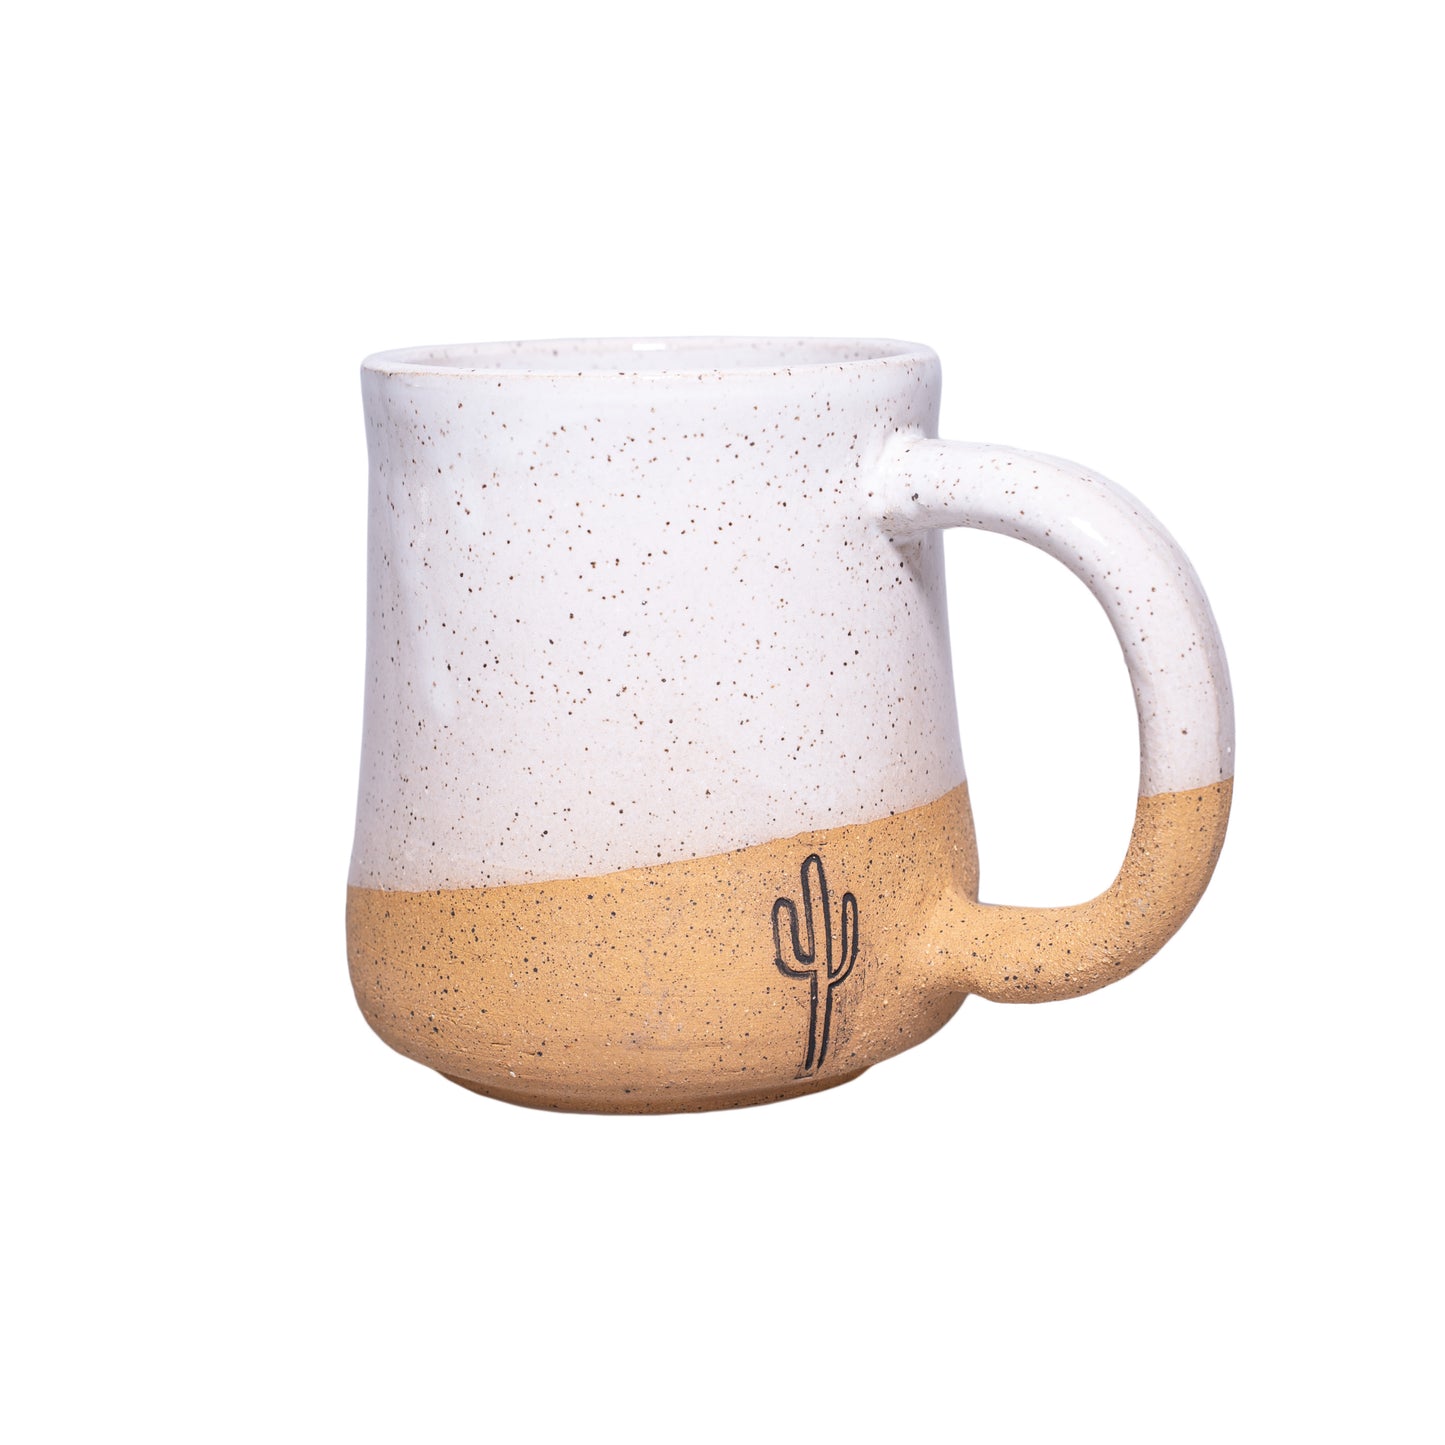 Arizona Cactus Stoneware Hand Thrown Ceramic Mug